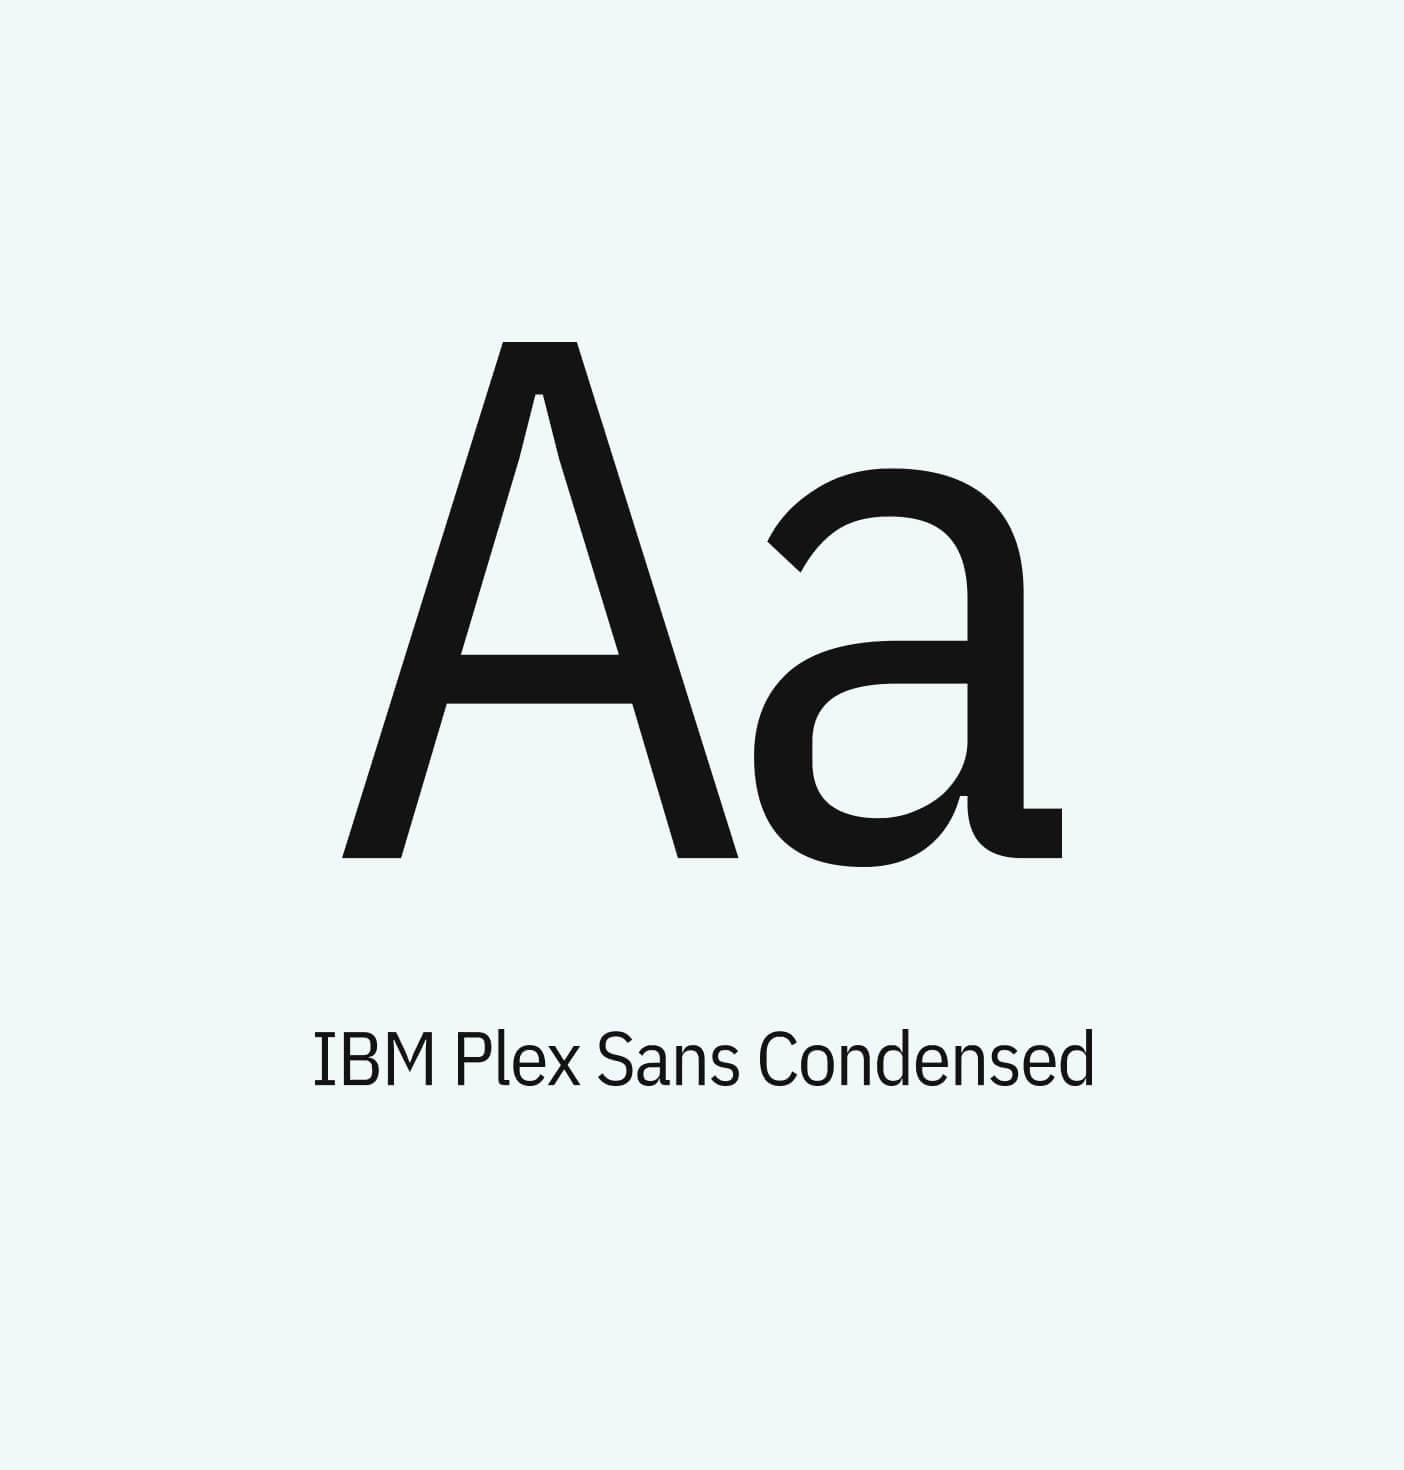 A letterform of the letter A for the font IBM Plex Sans Condensed.